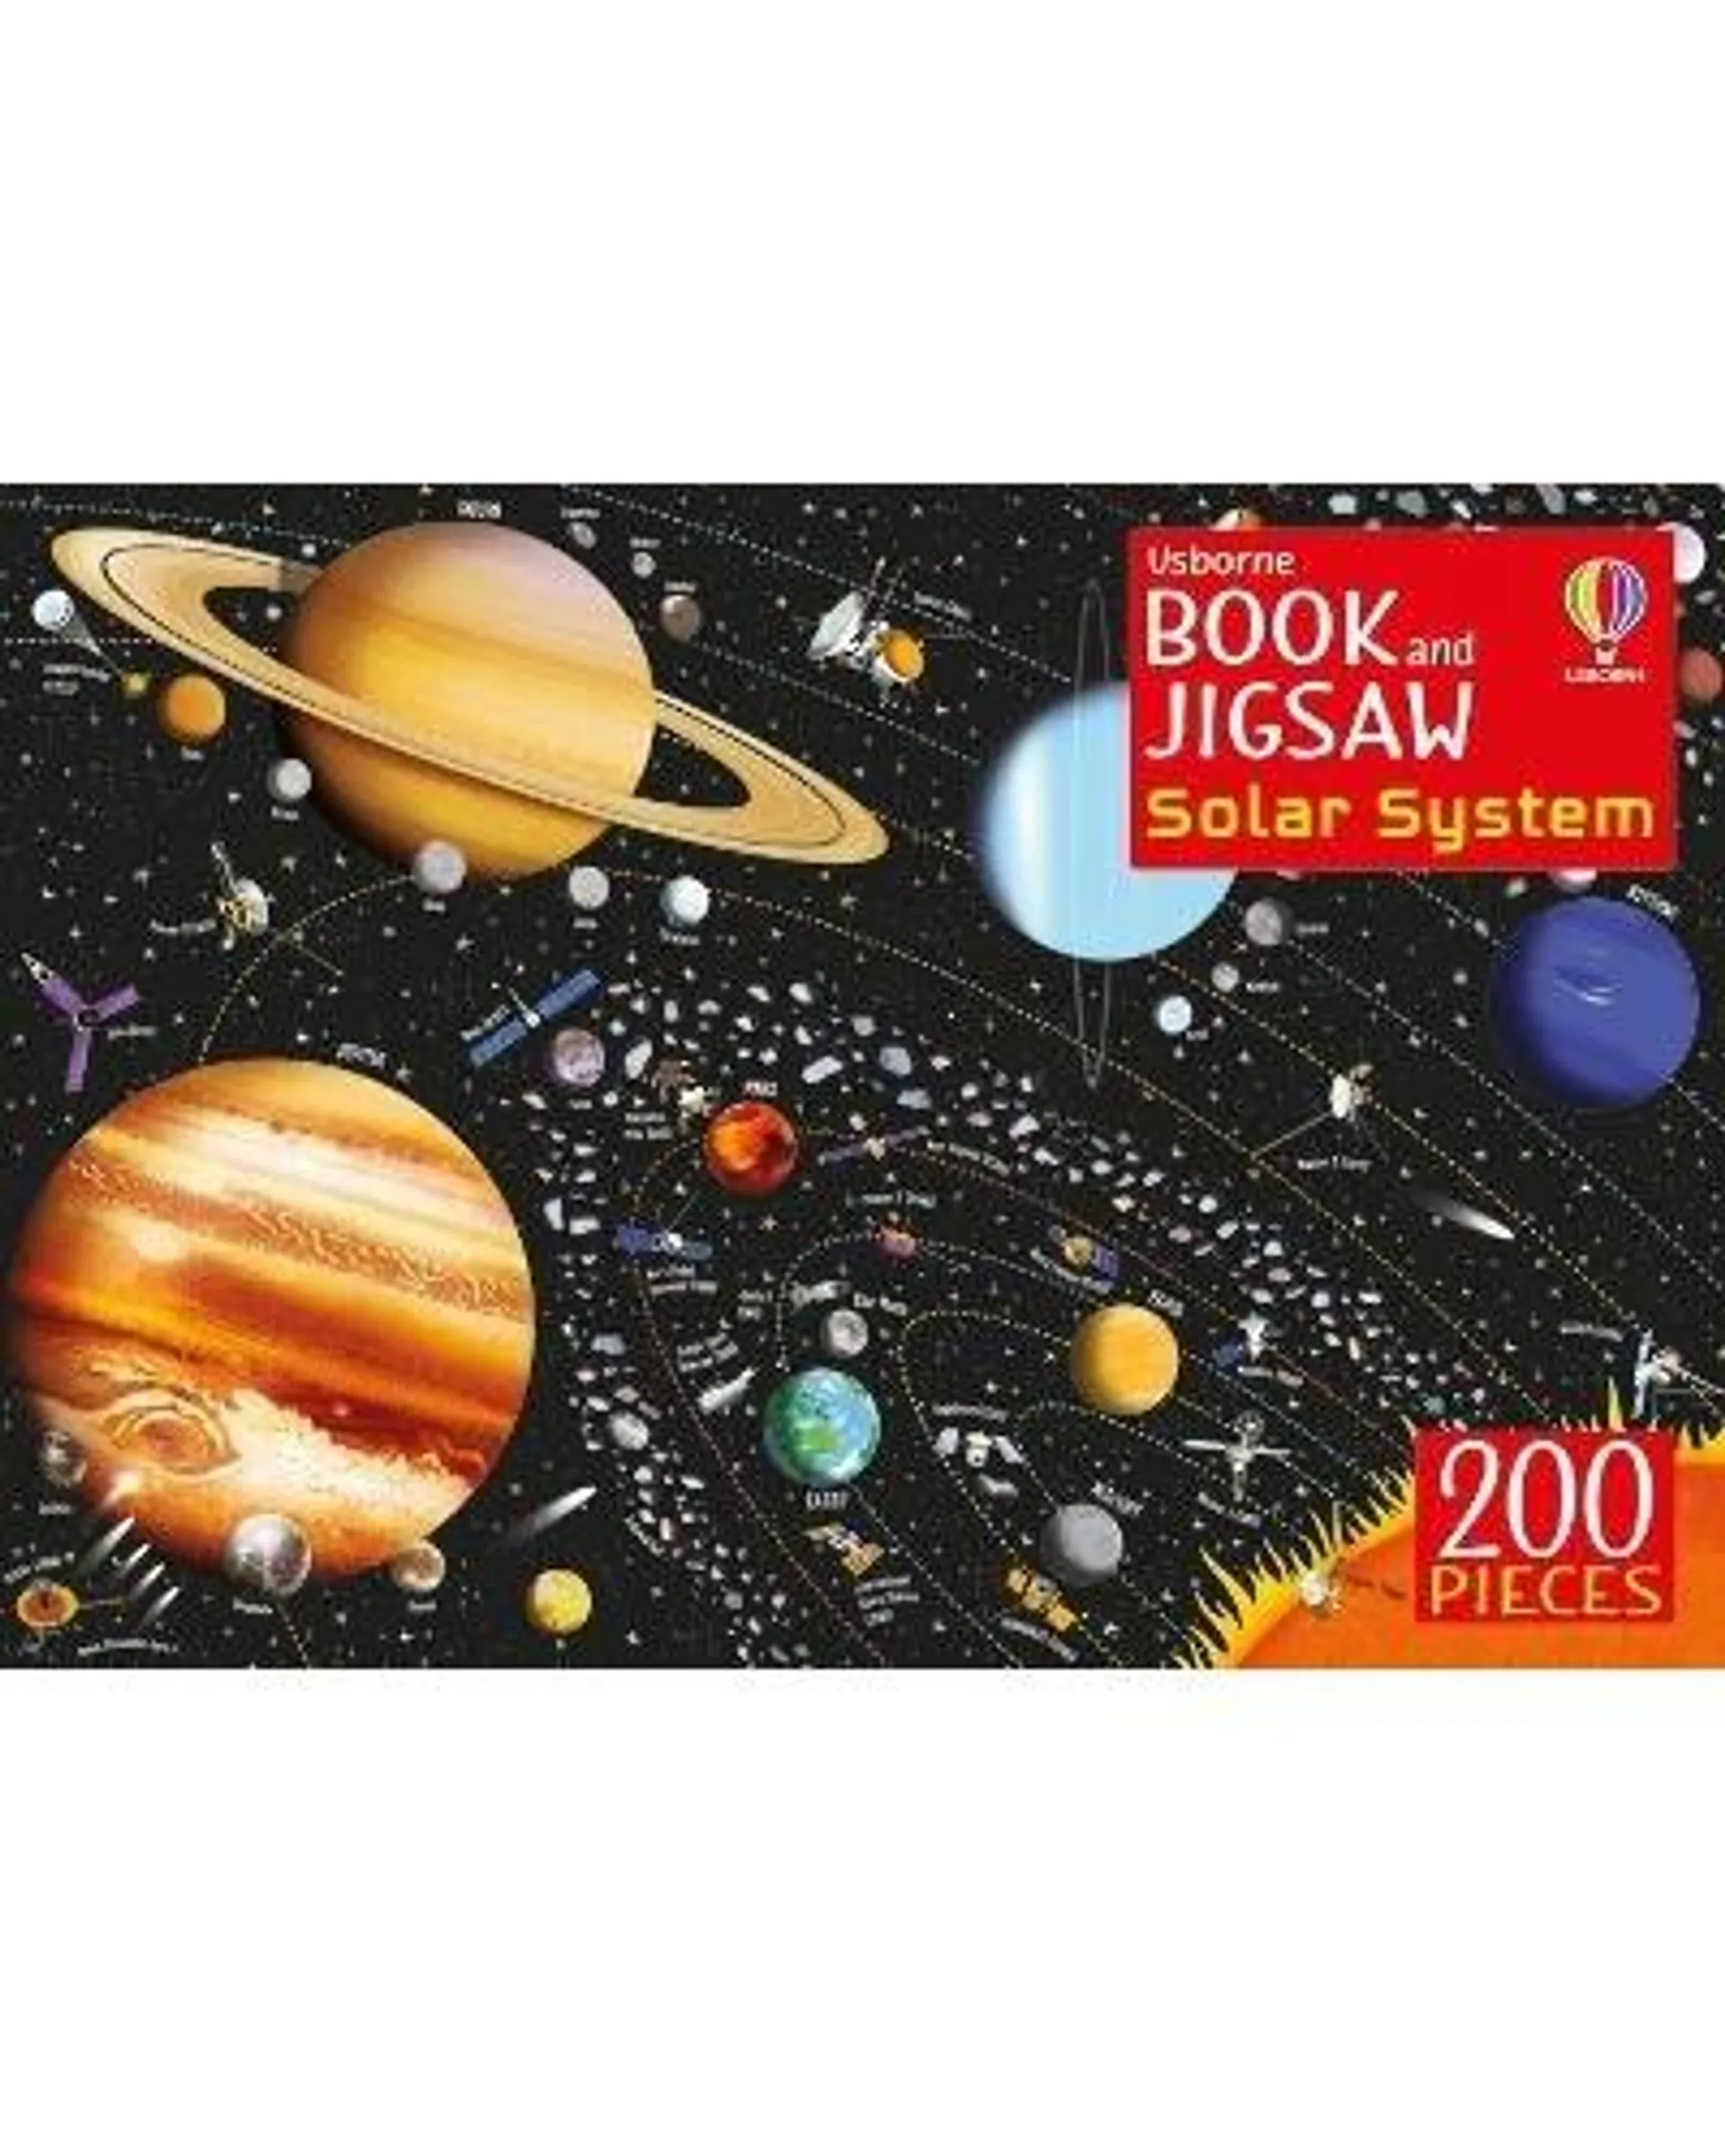 The Solar System (Paperback)